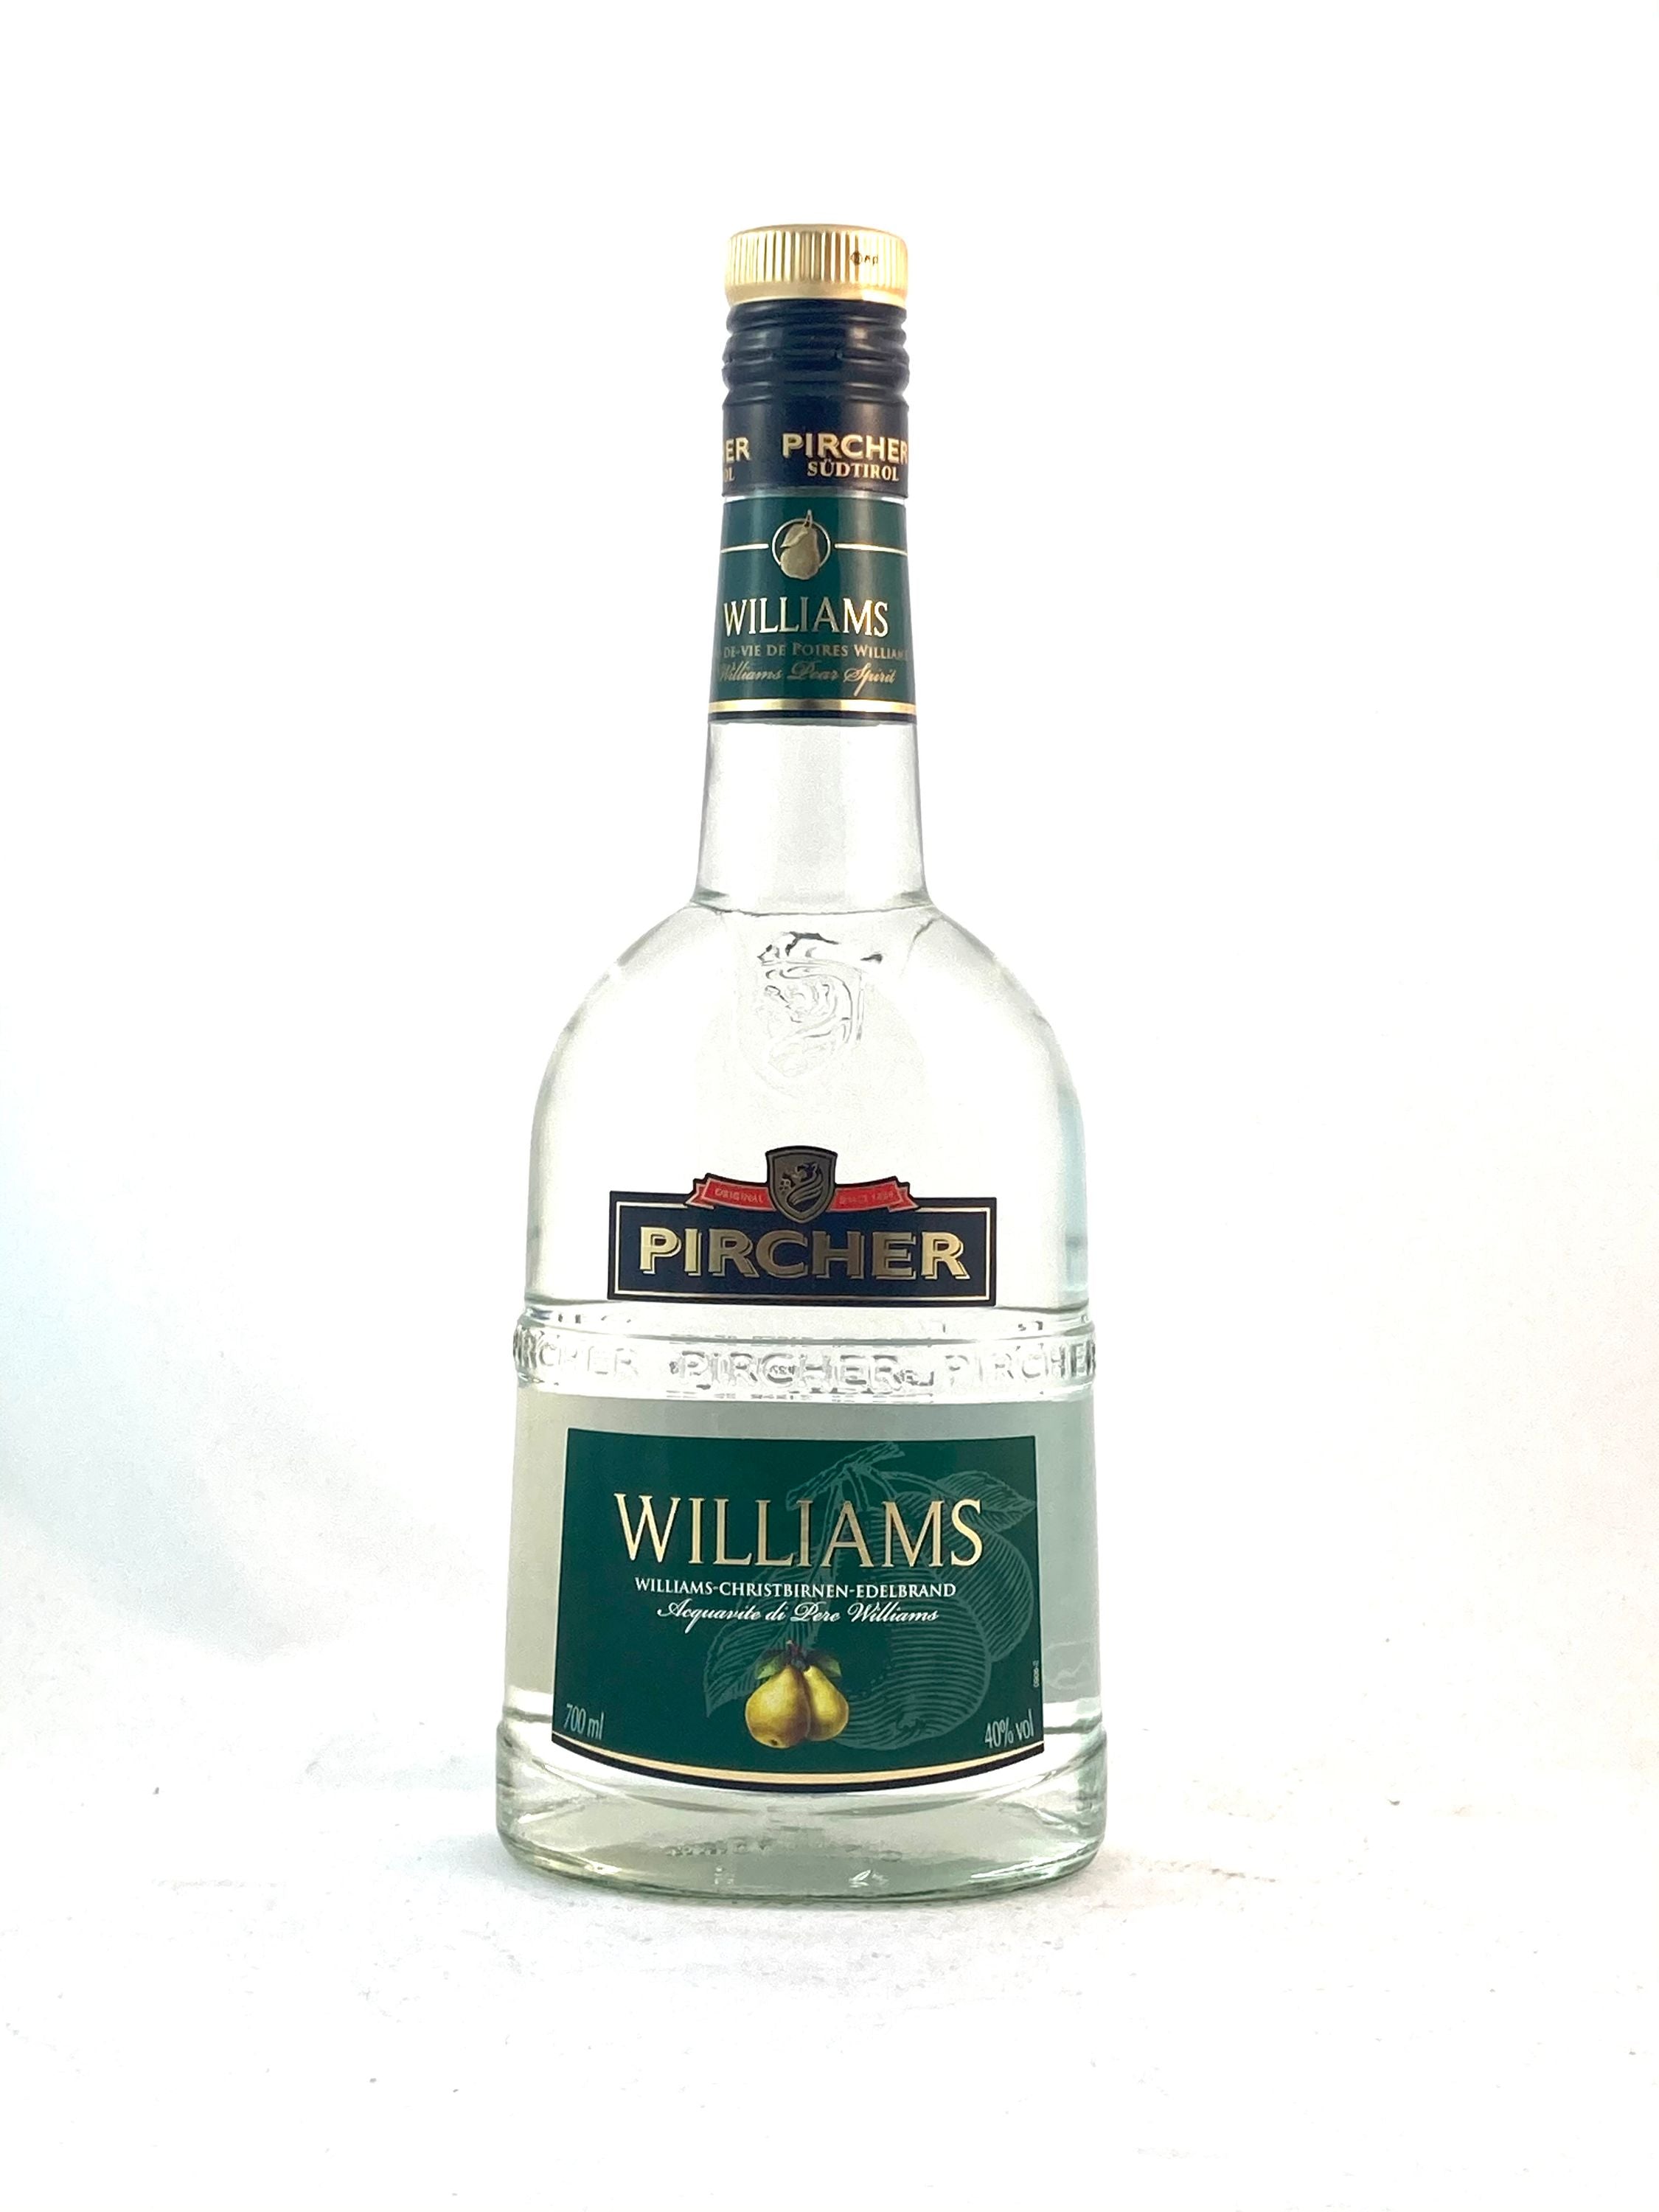 Pircher Williams 0.7l, alc. 40% by volume, Italian brandy